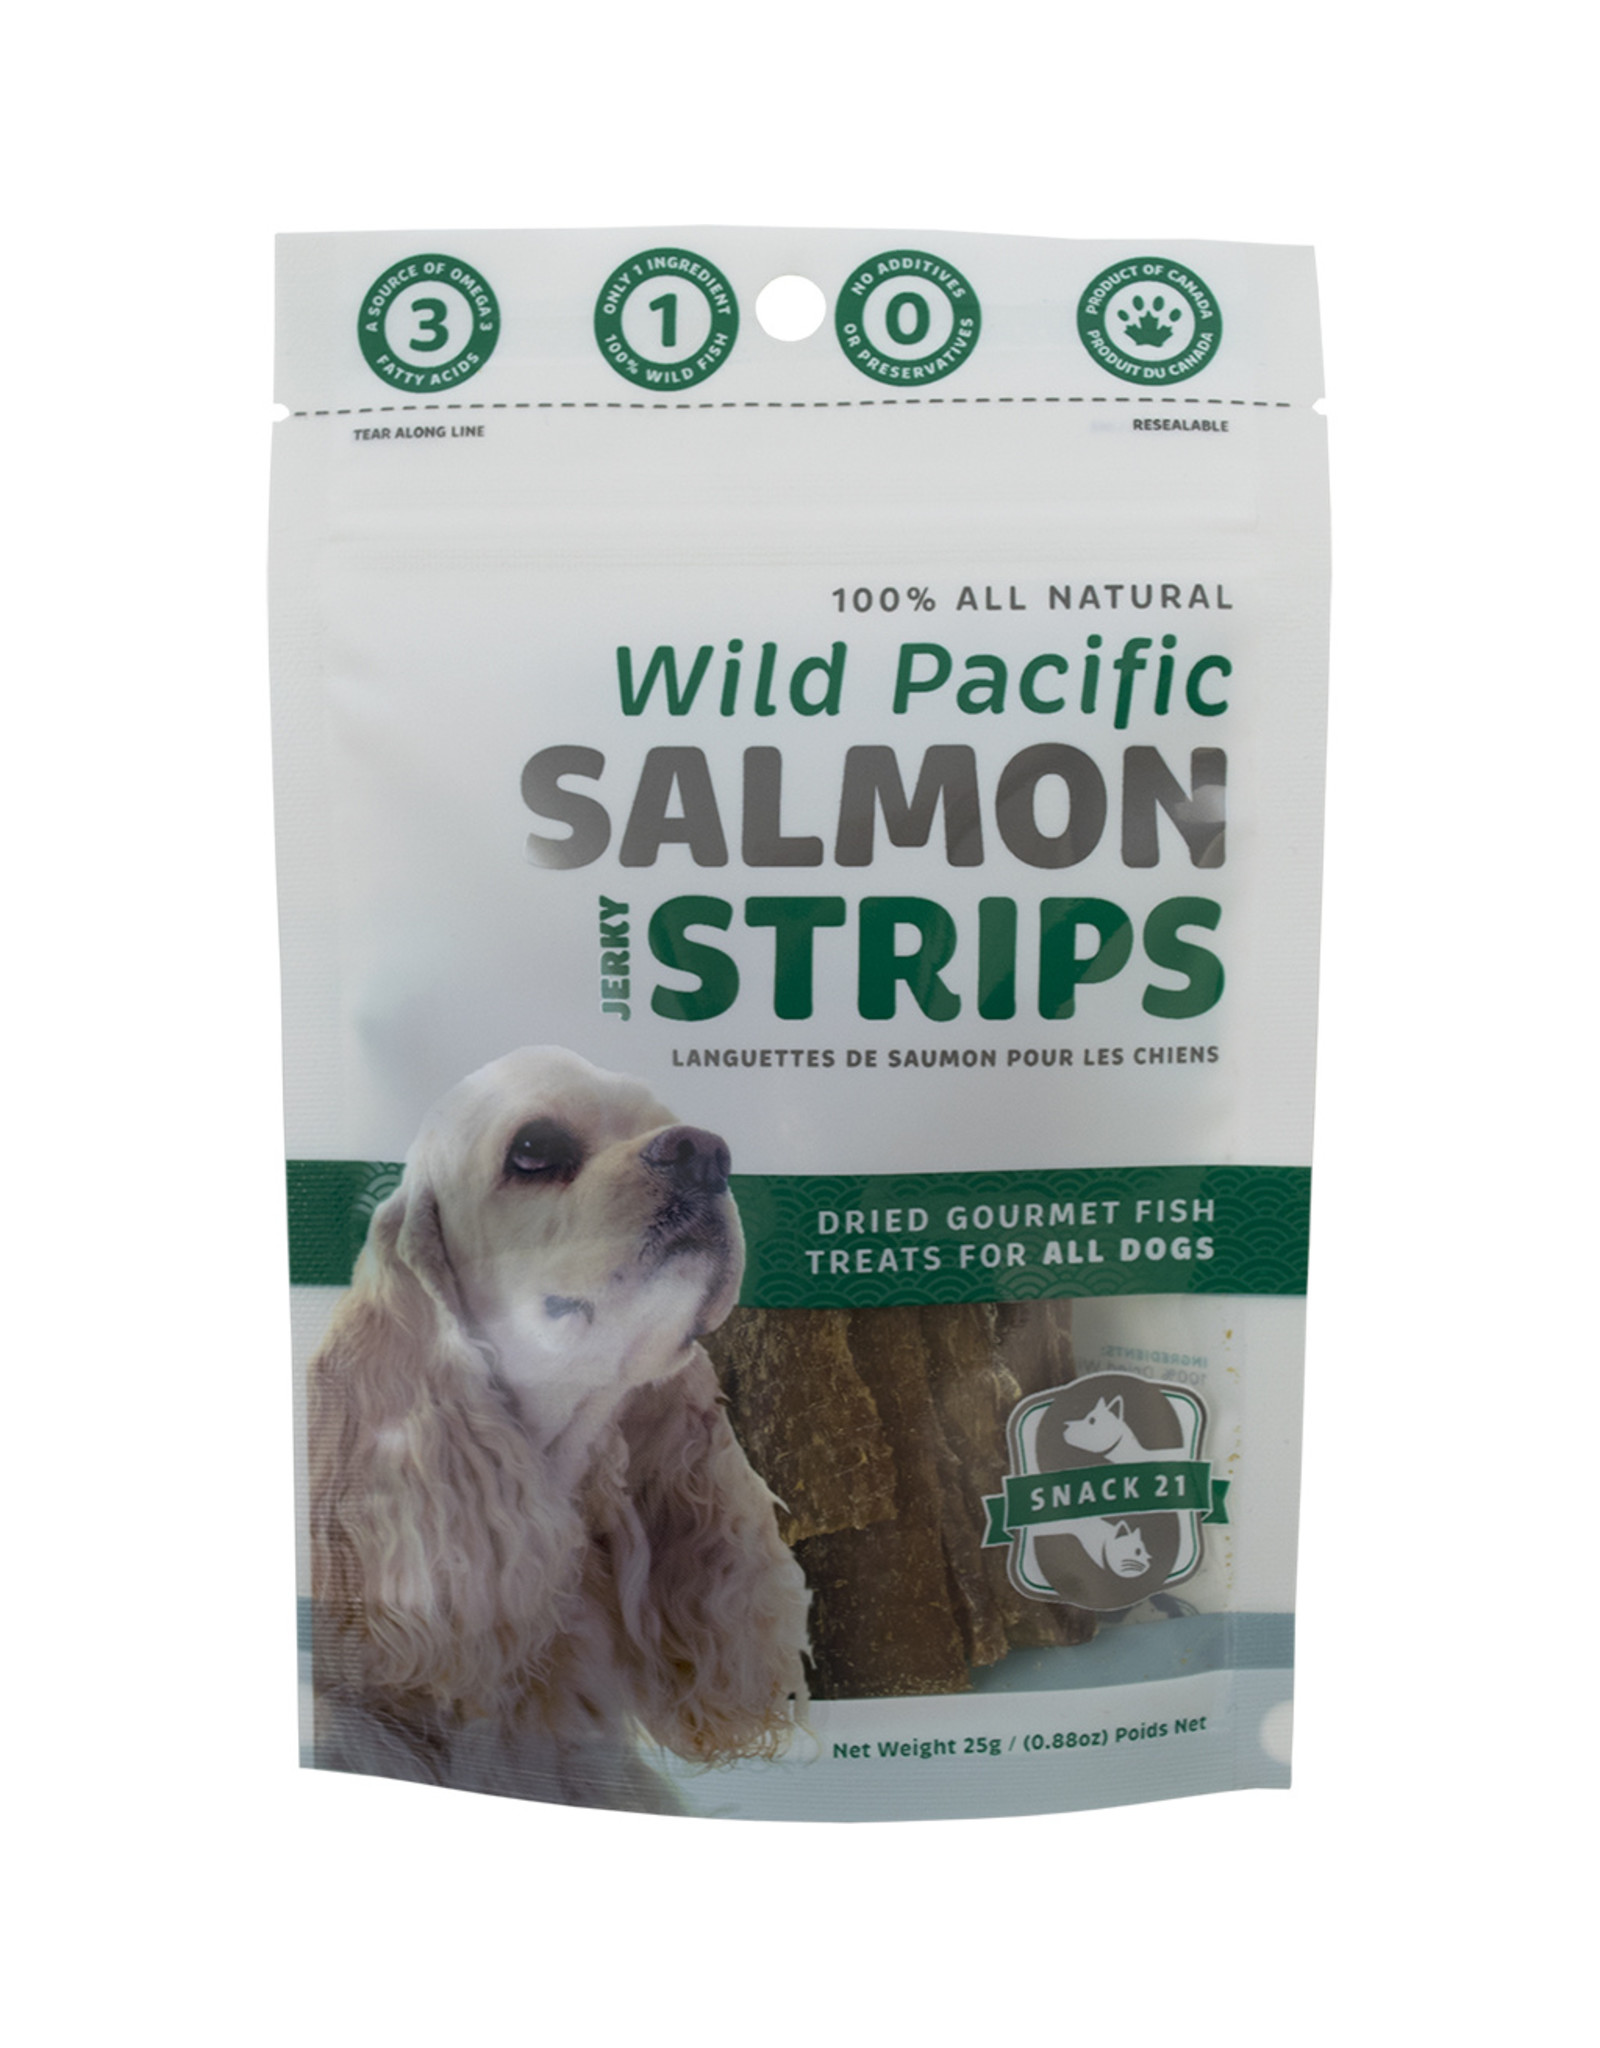 Snack 21 Wild Pacific Salmon Jerky Strips